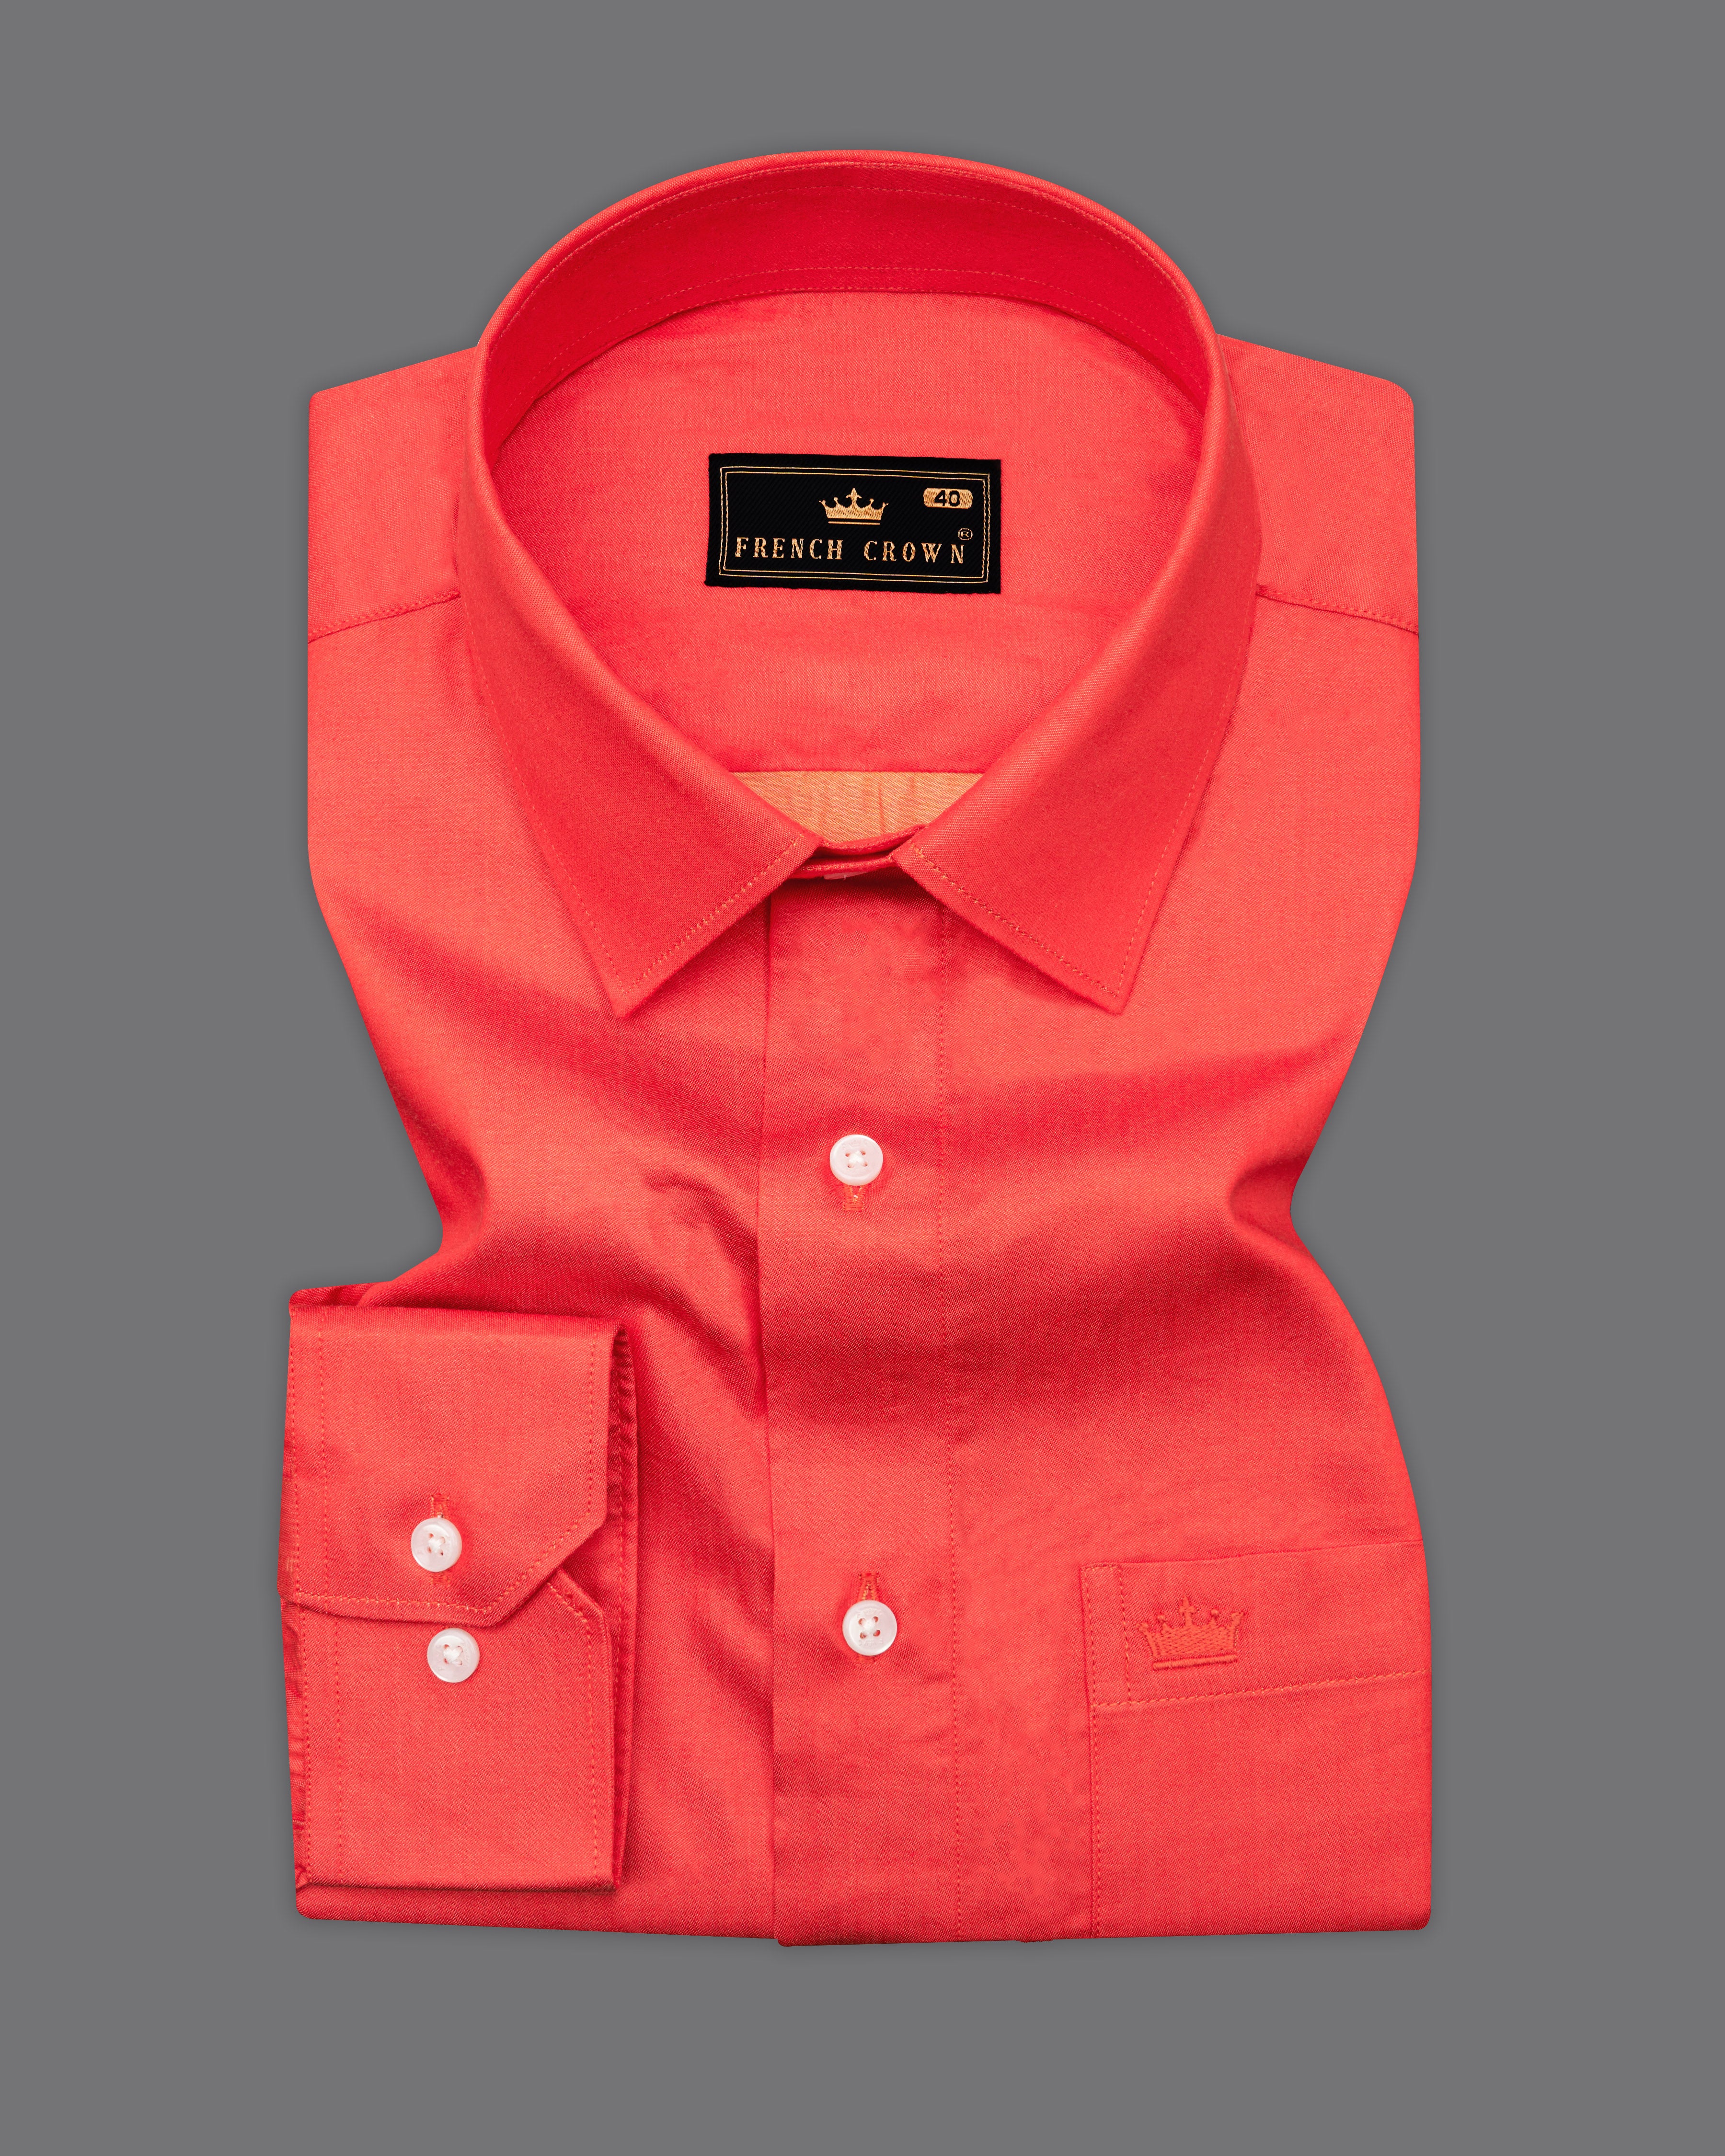 Radical Red Chambray Premium Cotton Shirt 9932-38, 9932-H-38, 9932-39, 9932-H-39, 9932-40, 9932-H-40, 9932-42, 9932-H-42, 9932-44, 9932-H-44, 9932-46, 9932-H-46, 9932-48, 9932-H-48, 9932-50, 9932-H-50, 9932-52, 9932-H-52